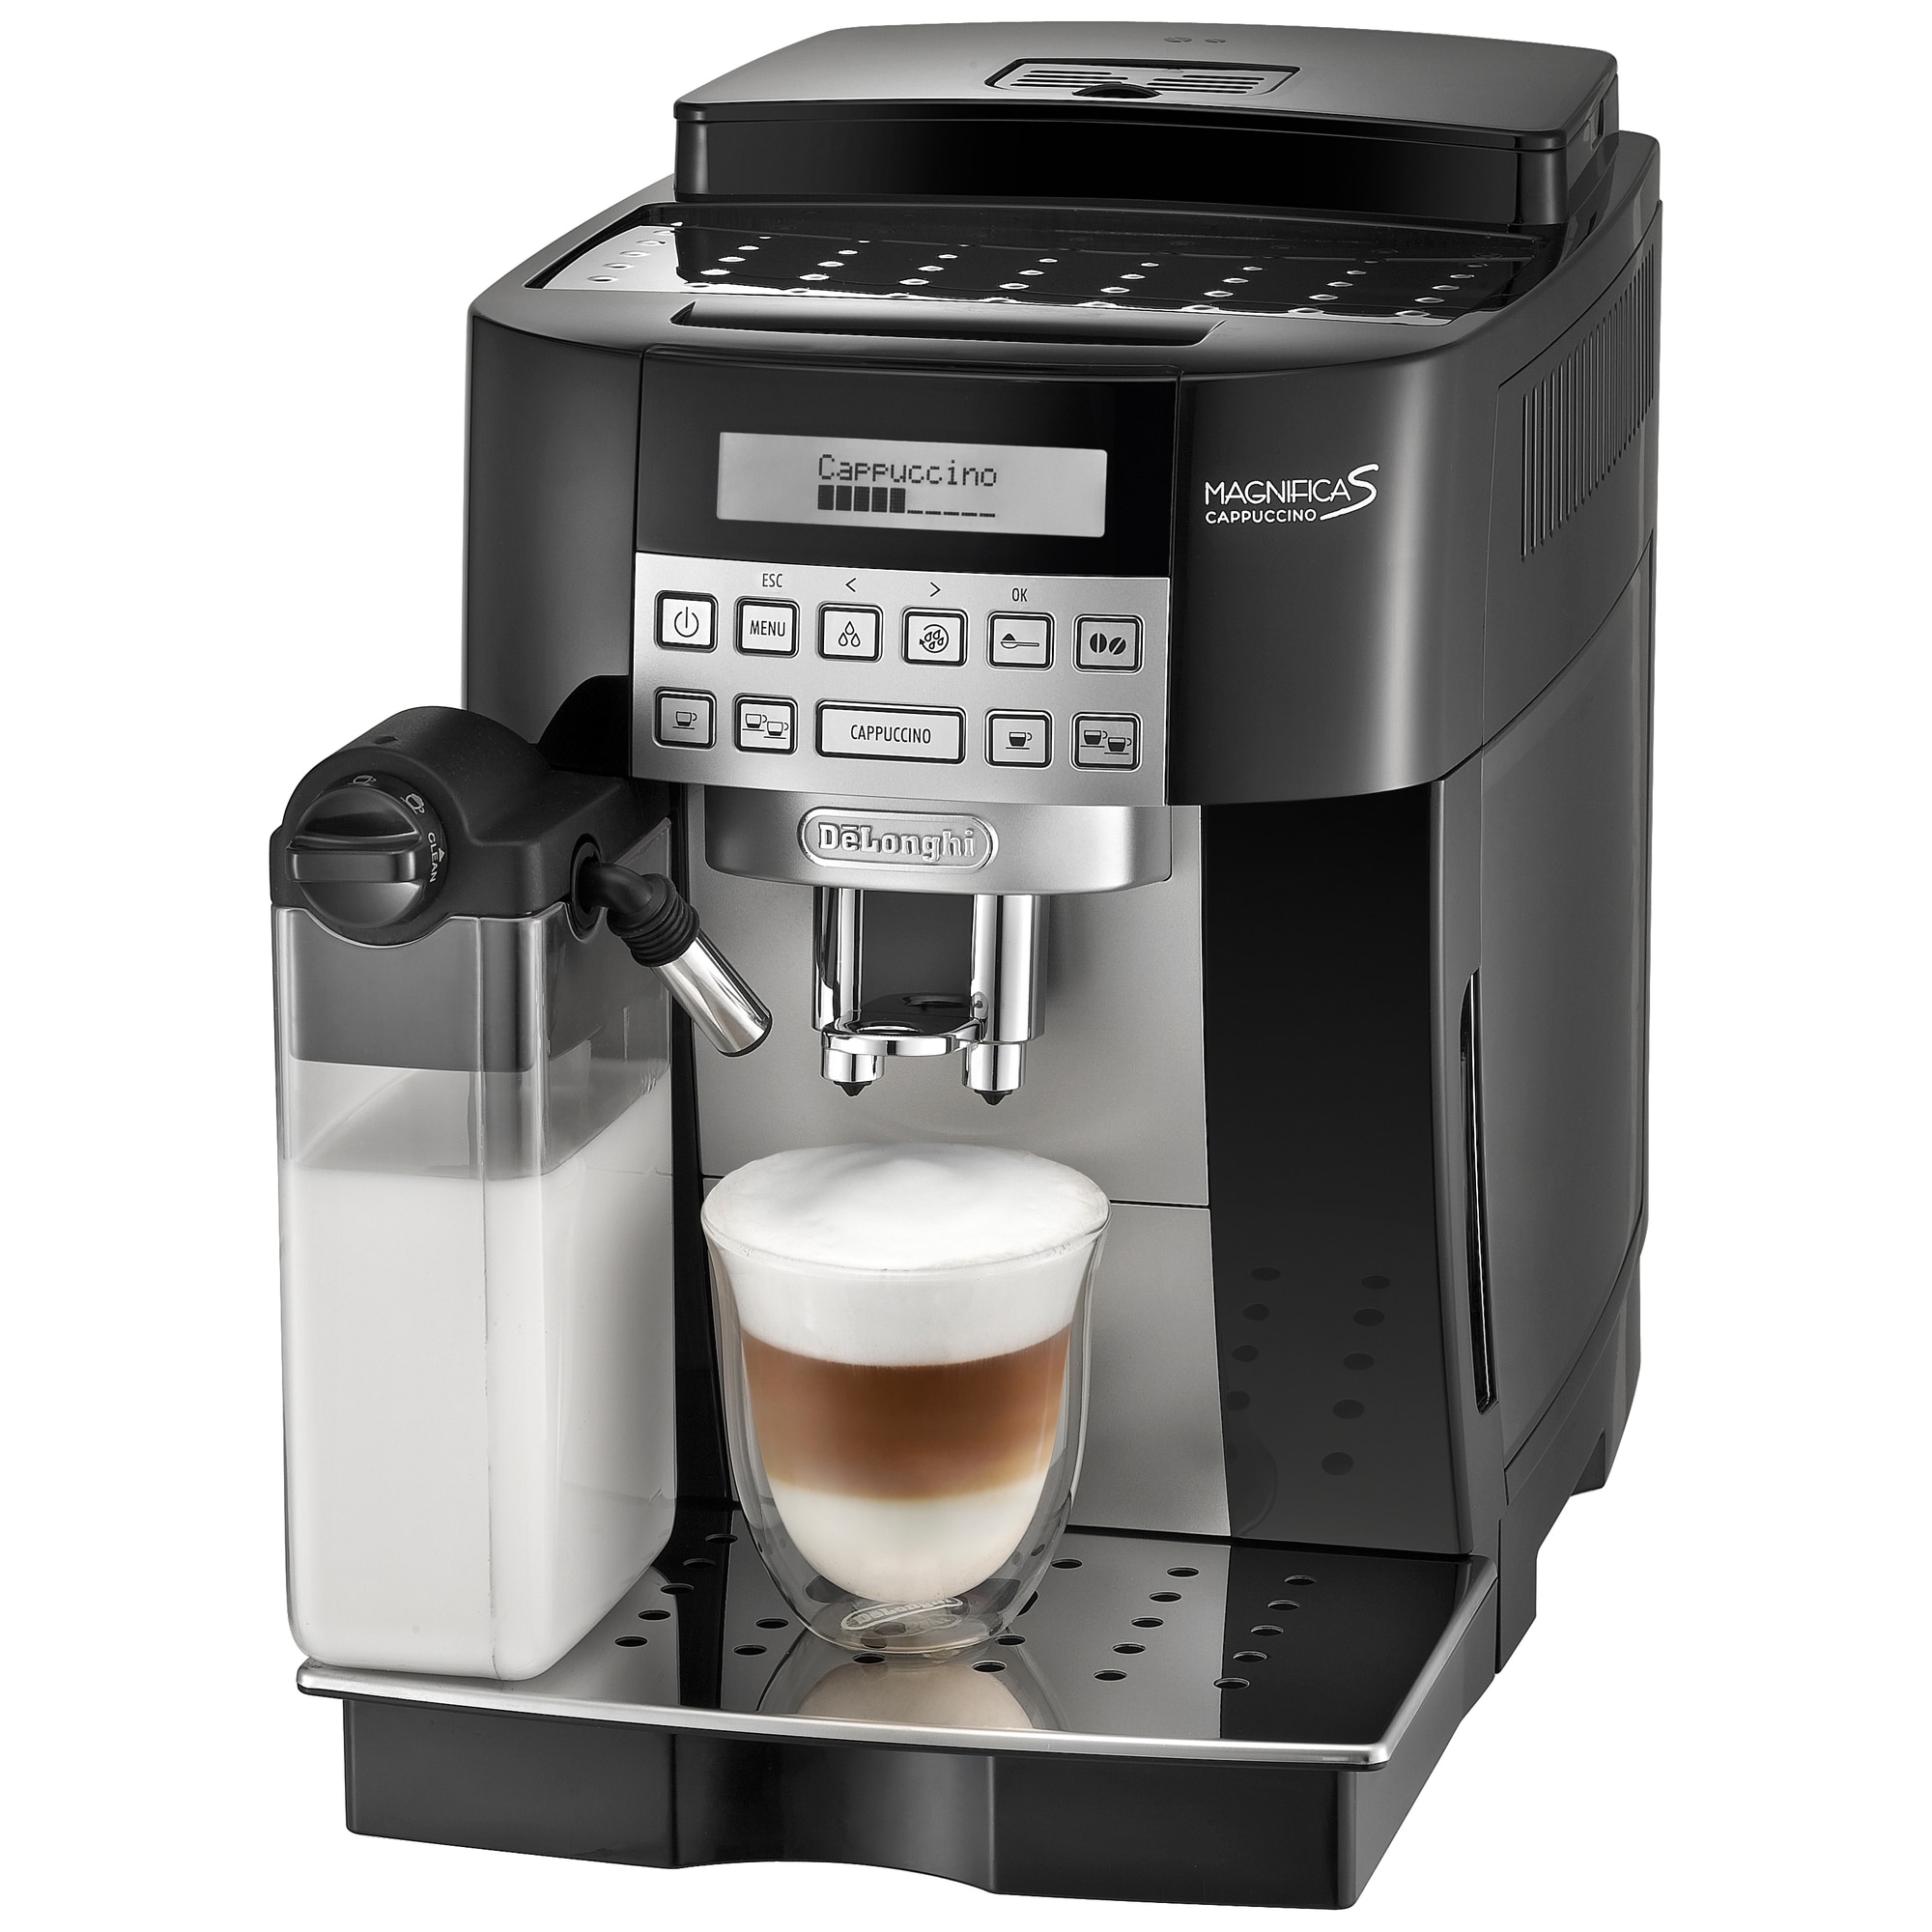 DeLonghi Magnifica kaffemaskin ECAM22360B - Elkjøp